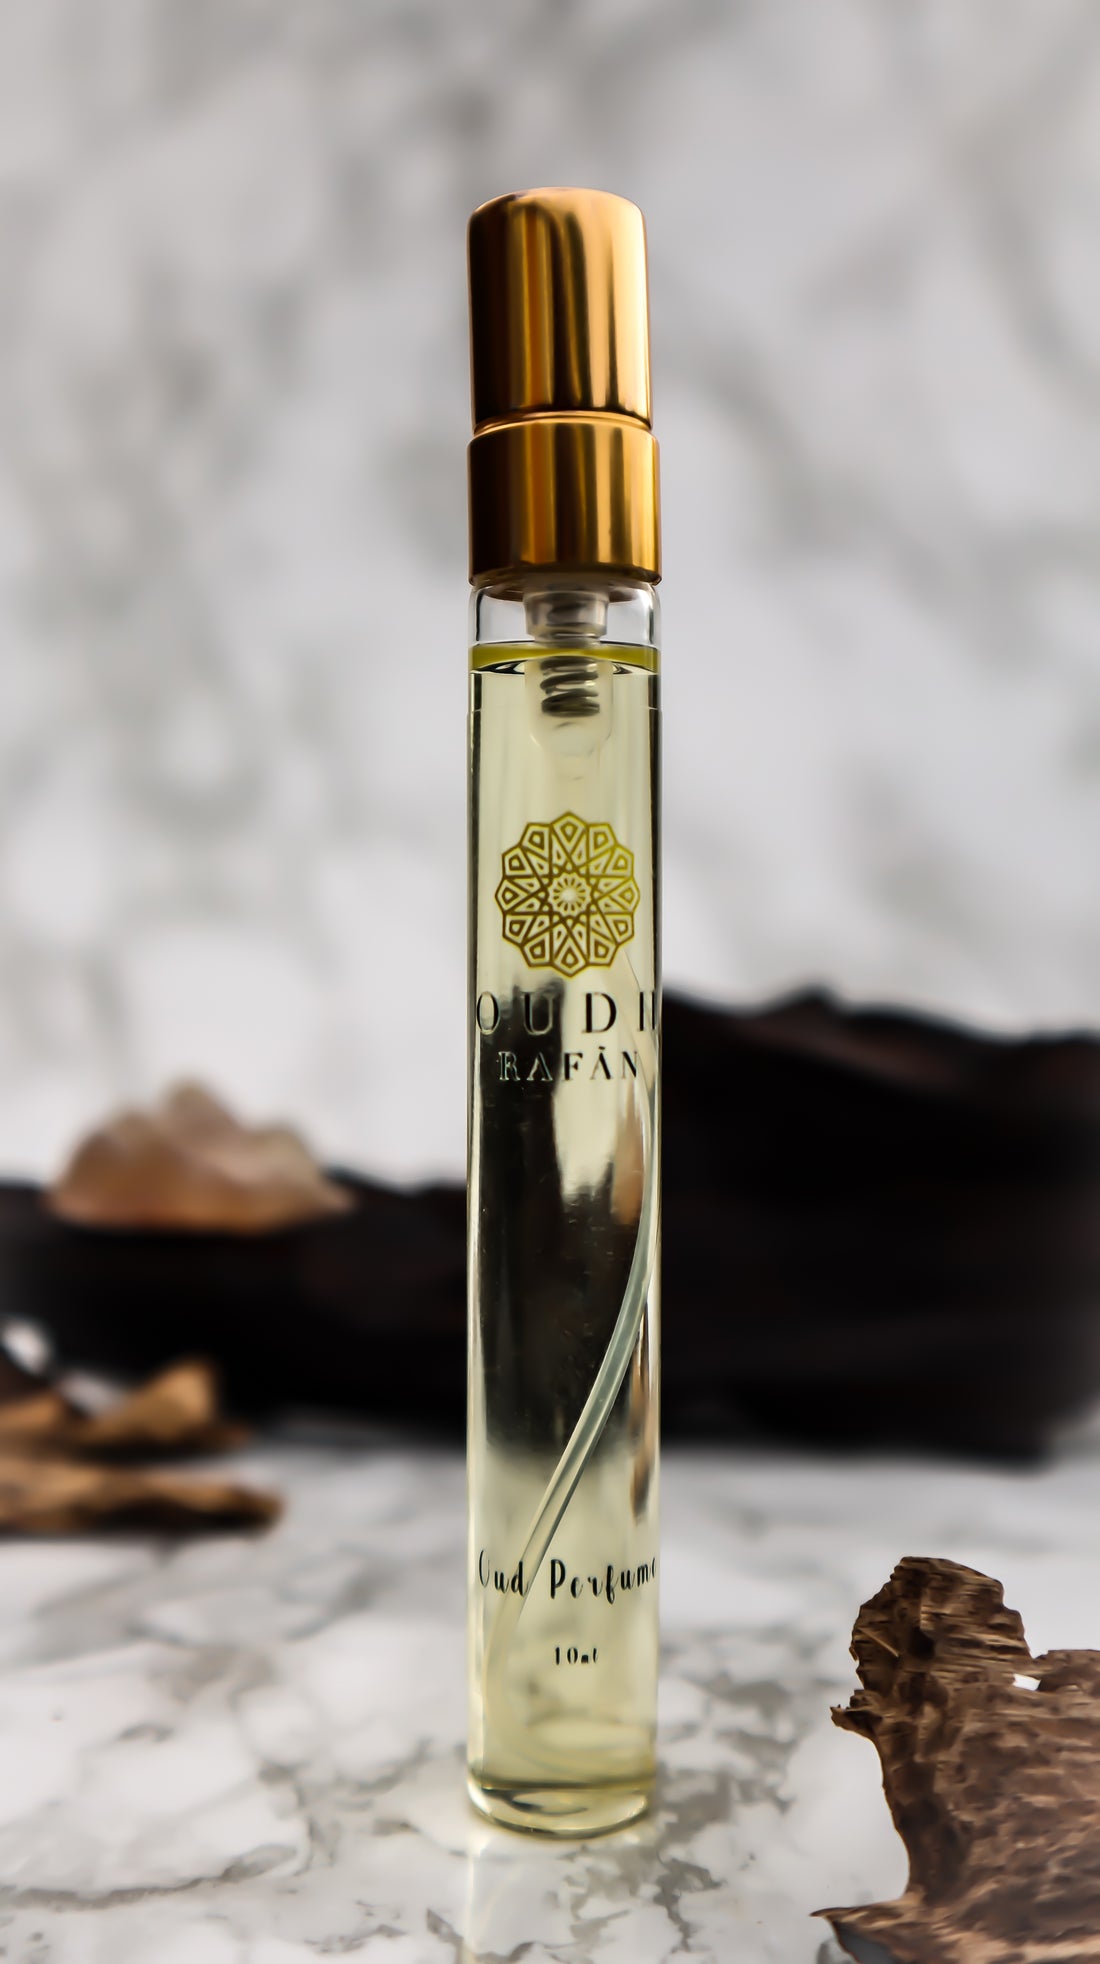 Petra - Luxury perfume in discovery size bottle 10ml - Iris, Cedar, Rosewood, Amber, Oud